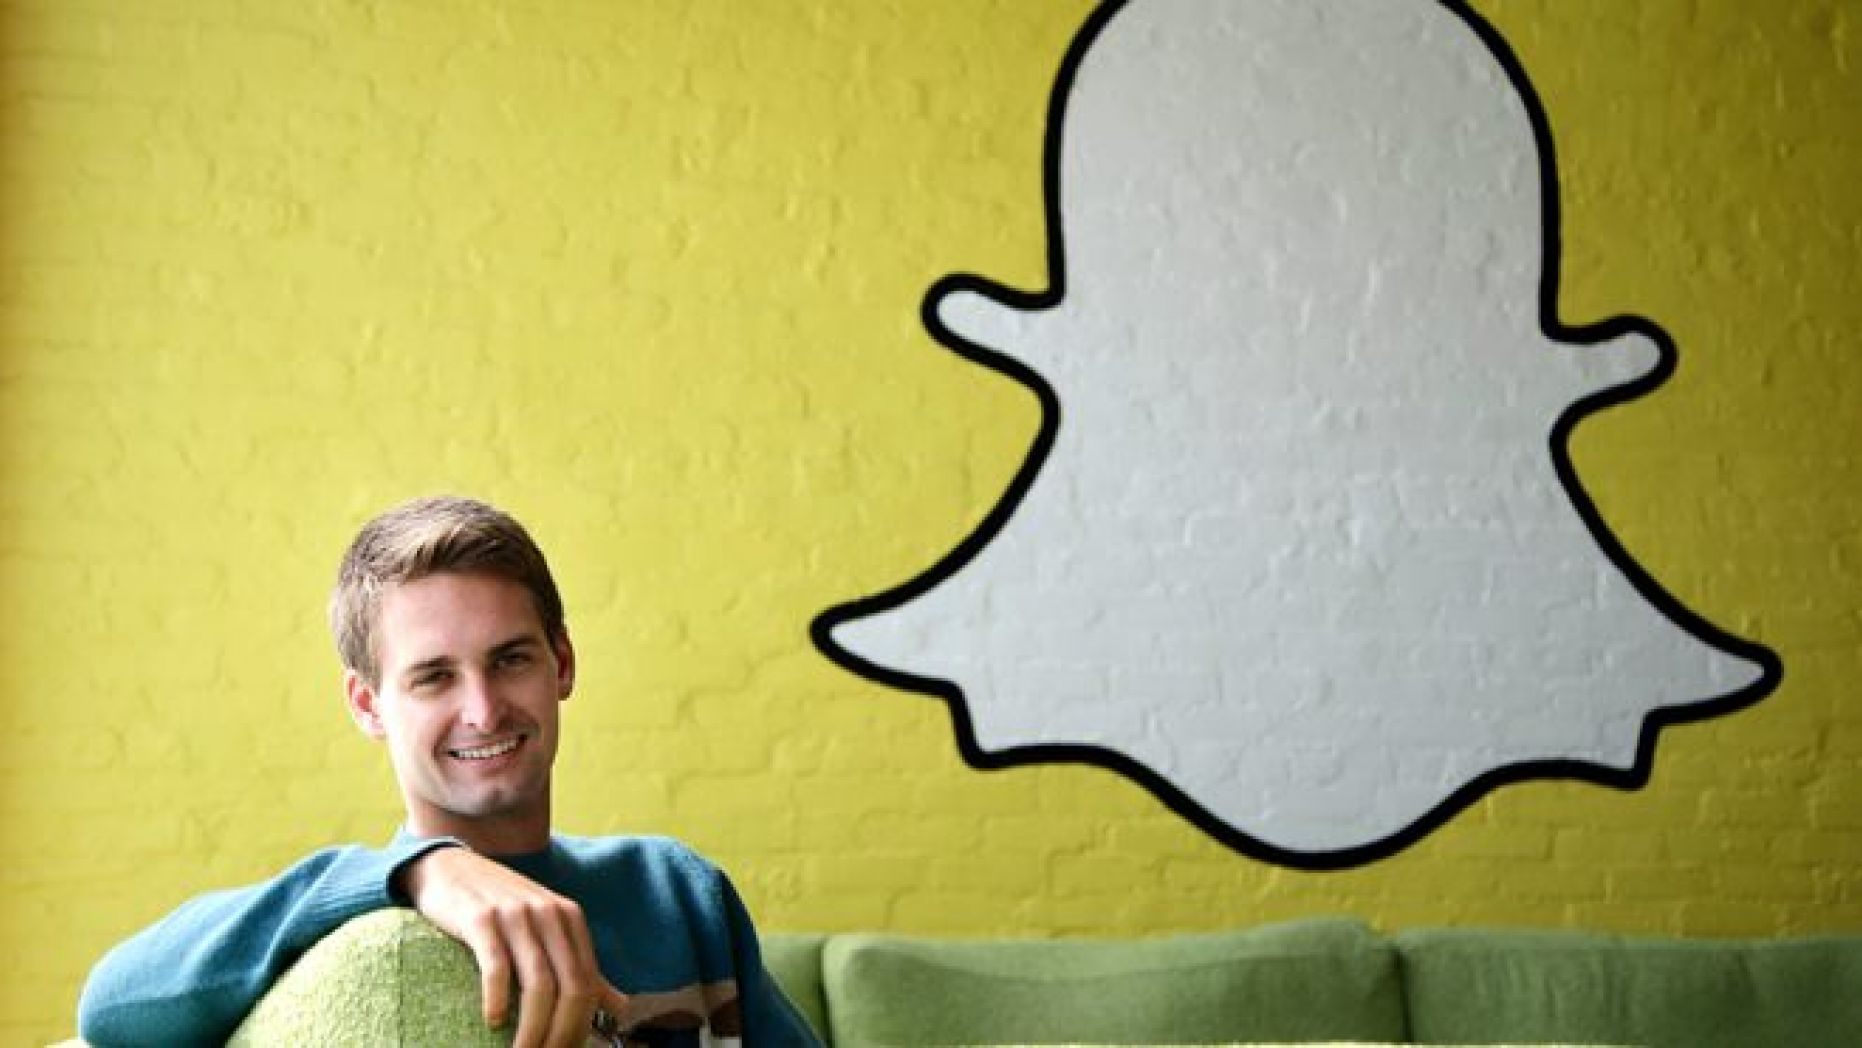 CEO of Snapchat Evan Spiegel